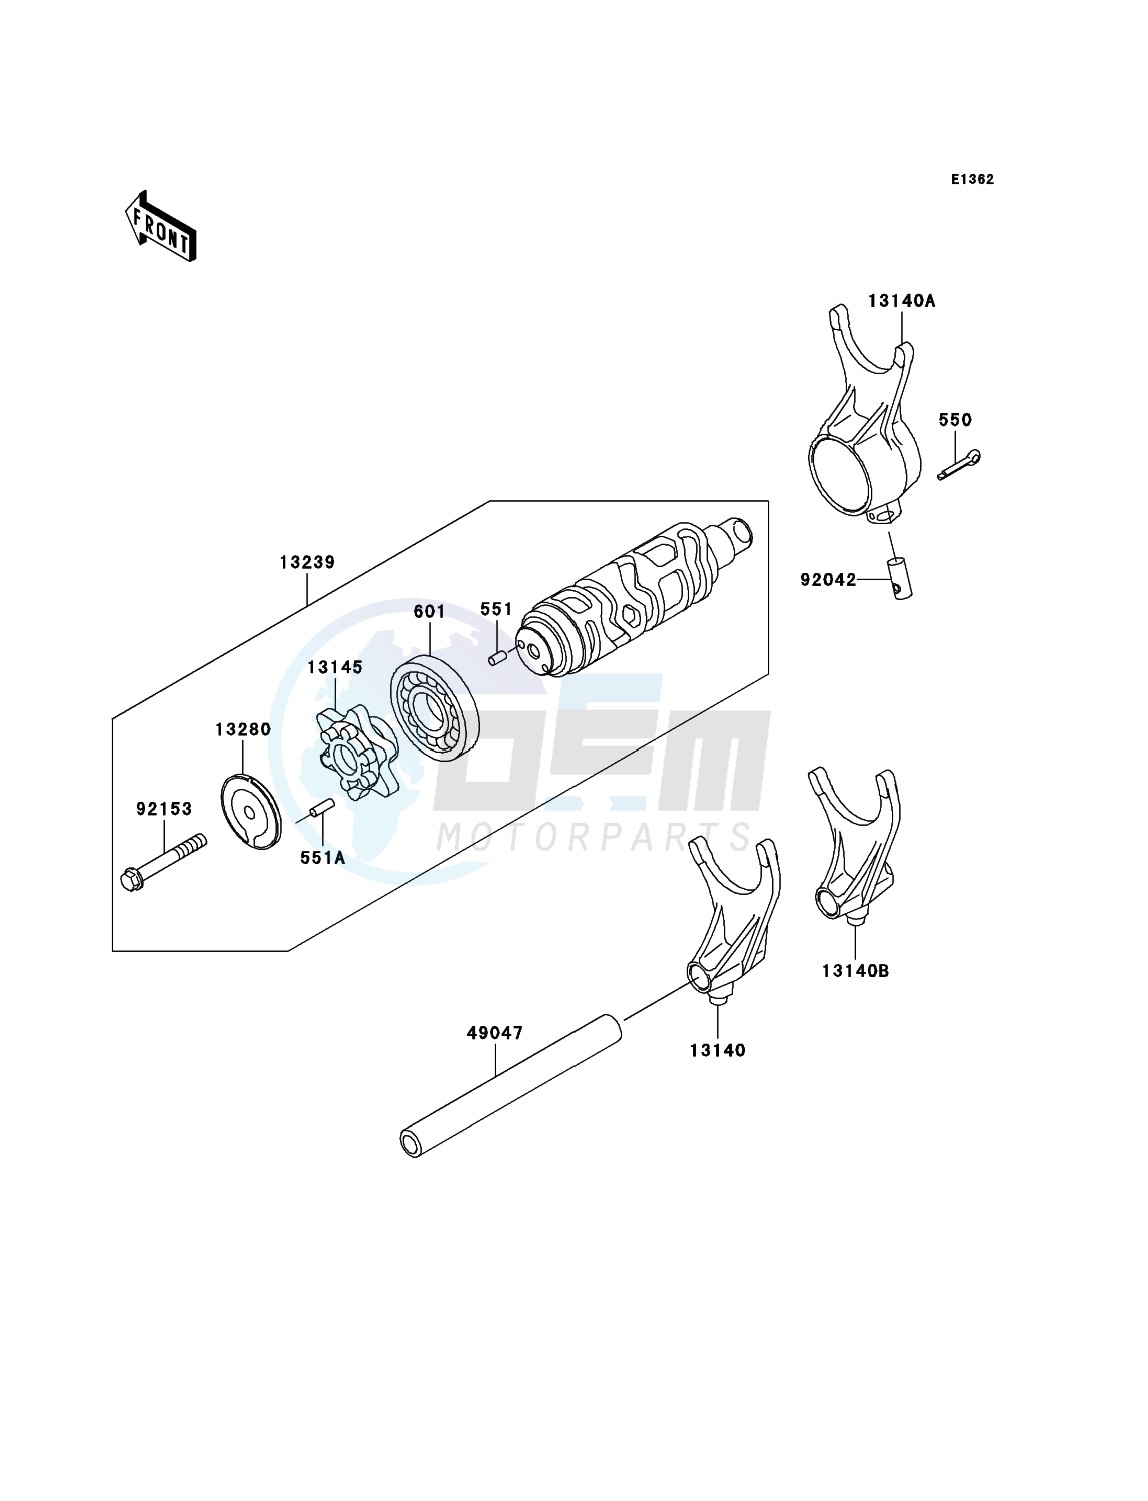 OEM Gear Change Drum/Shift Fork(s) - Kawasaki [Motorcycle] VN1600 